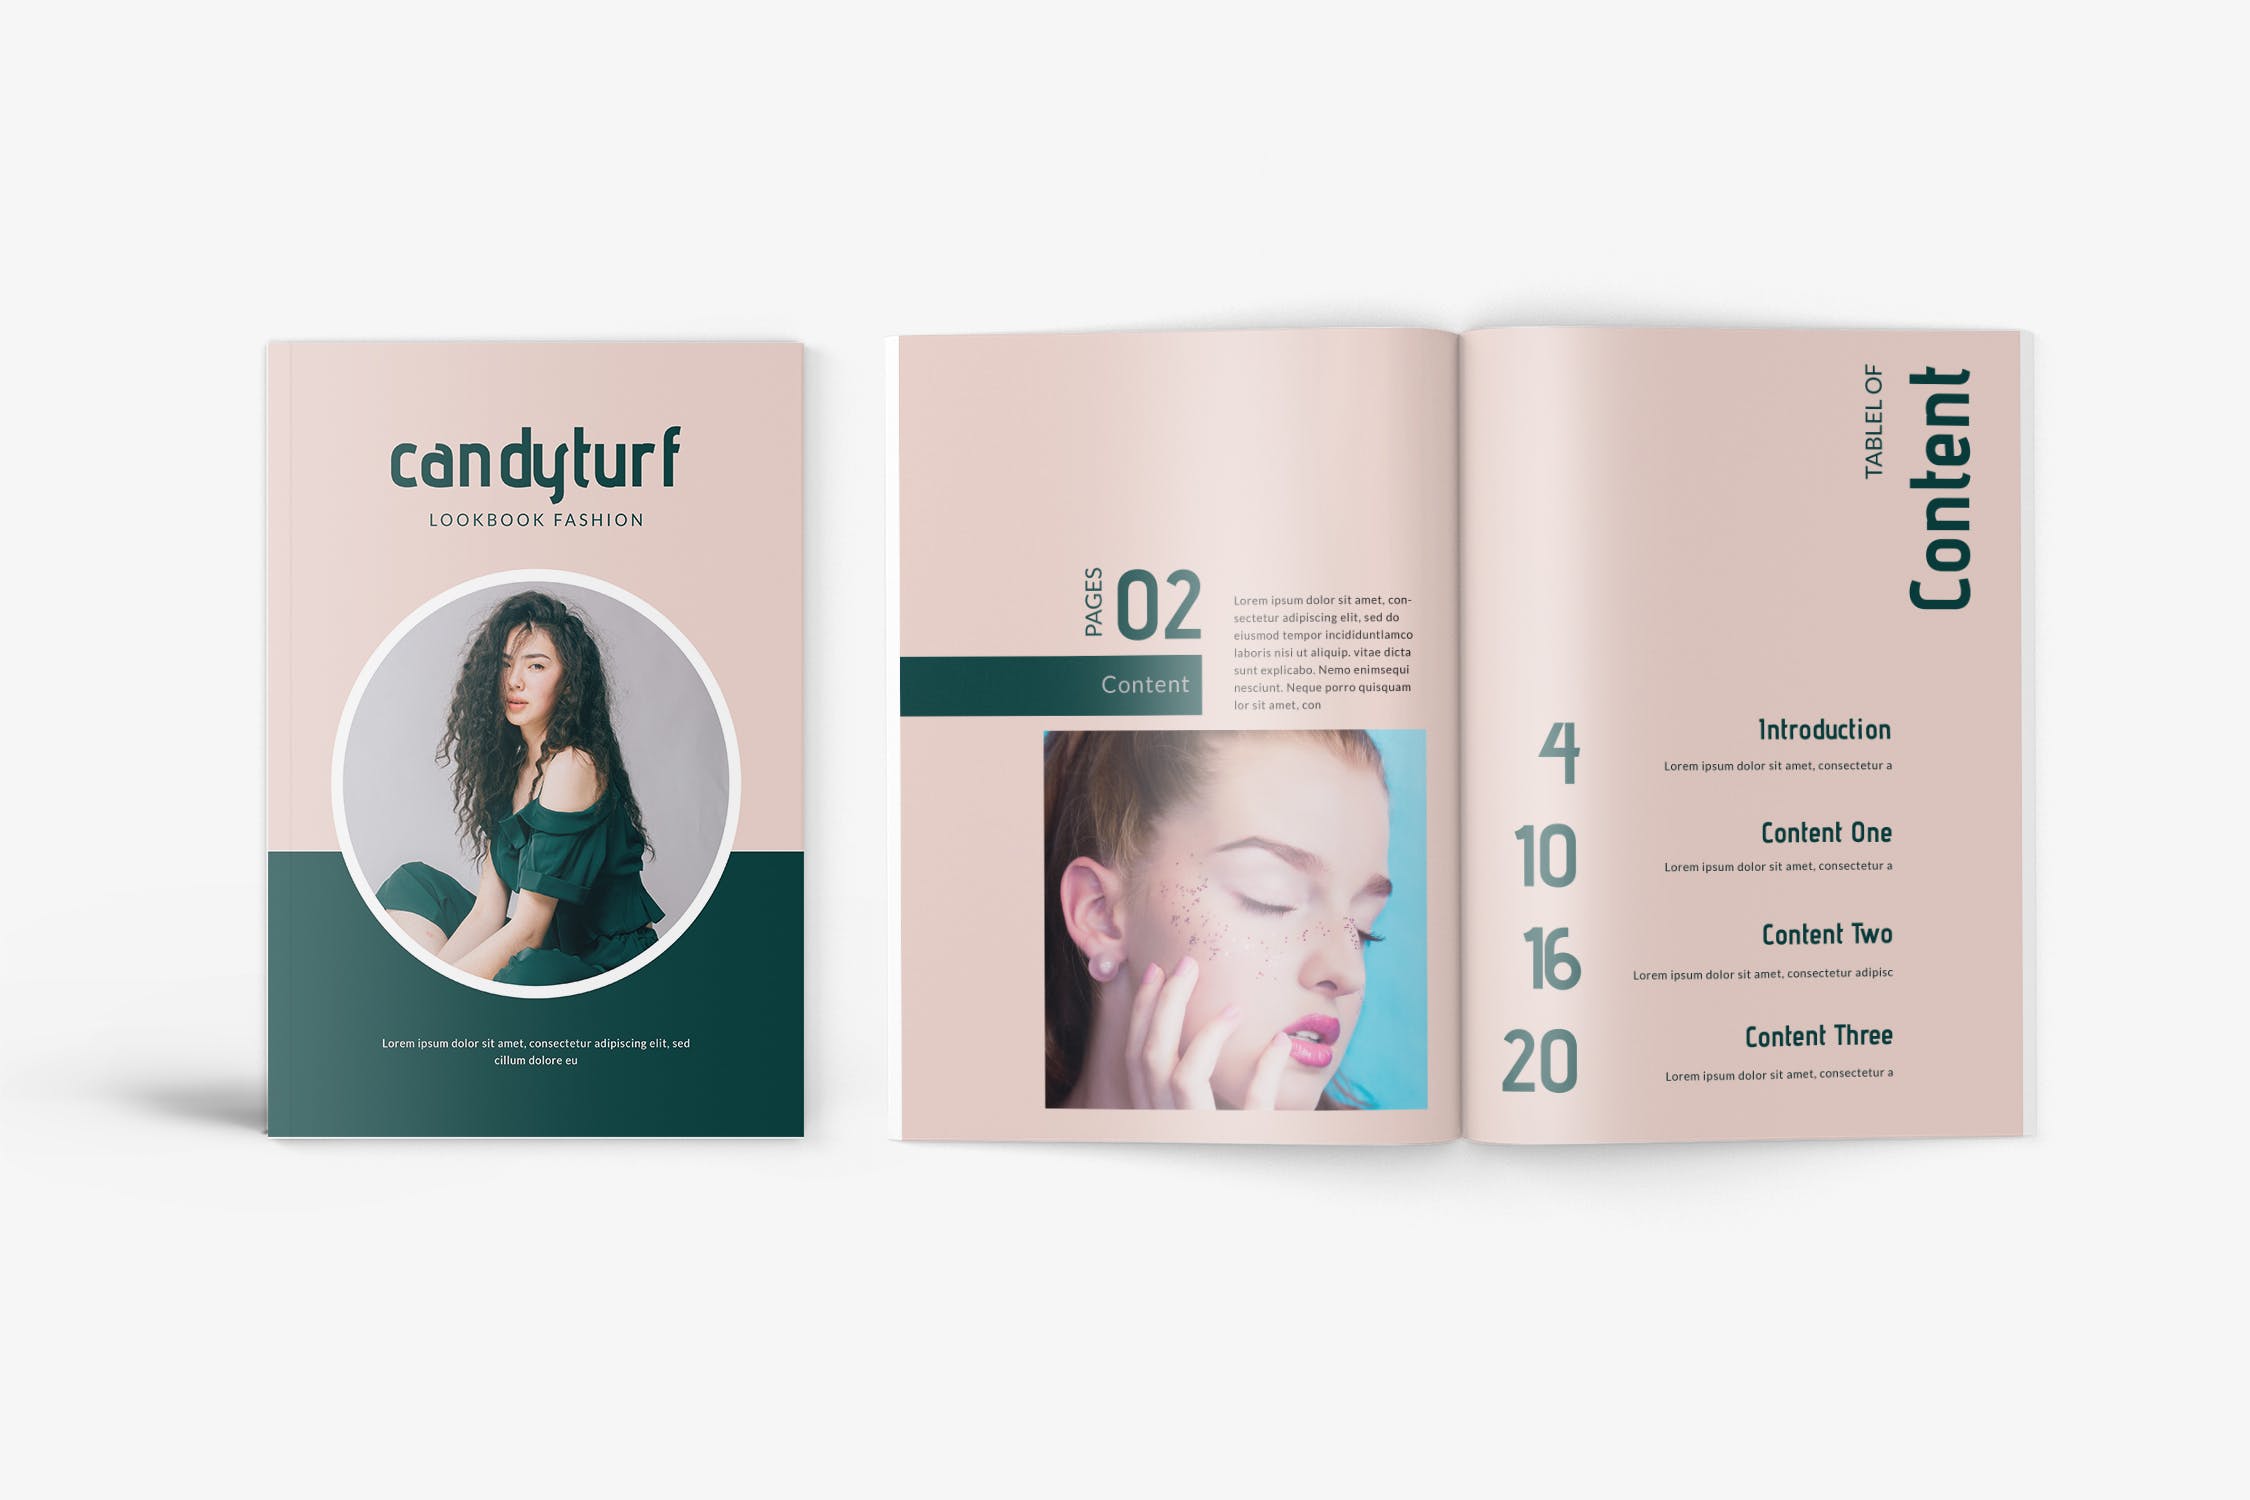 时尚服饰品牌产品普贤居精选目录设计模板 Candyturf Fashion Lookbook Catalogue插图